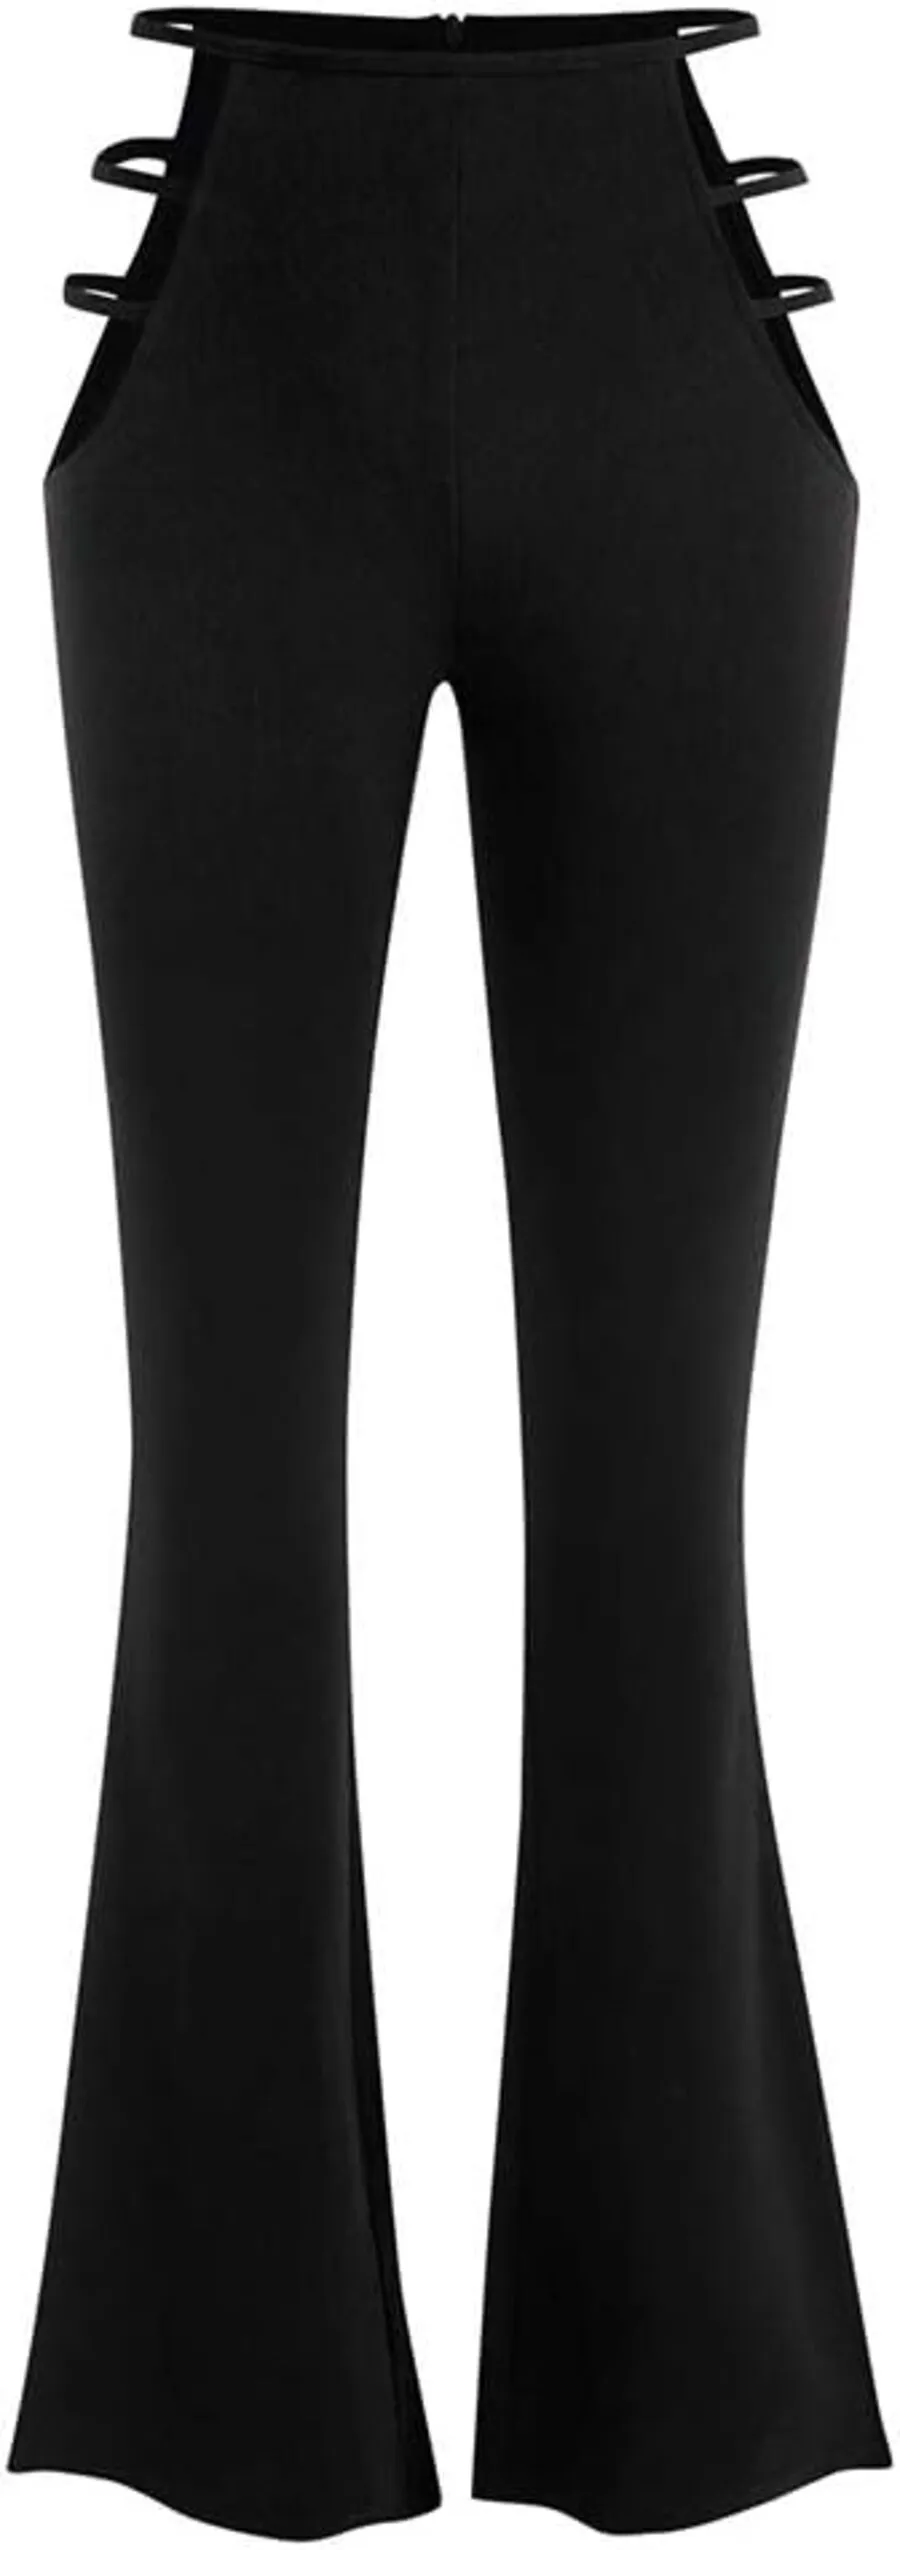 Calça feminina ZAFUL cintura alta com recorte escada bootcut texturizada calça flare perna larga calça noturna